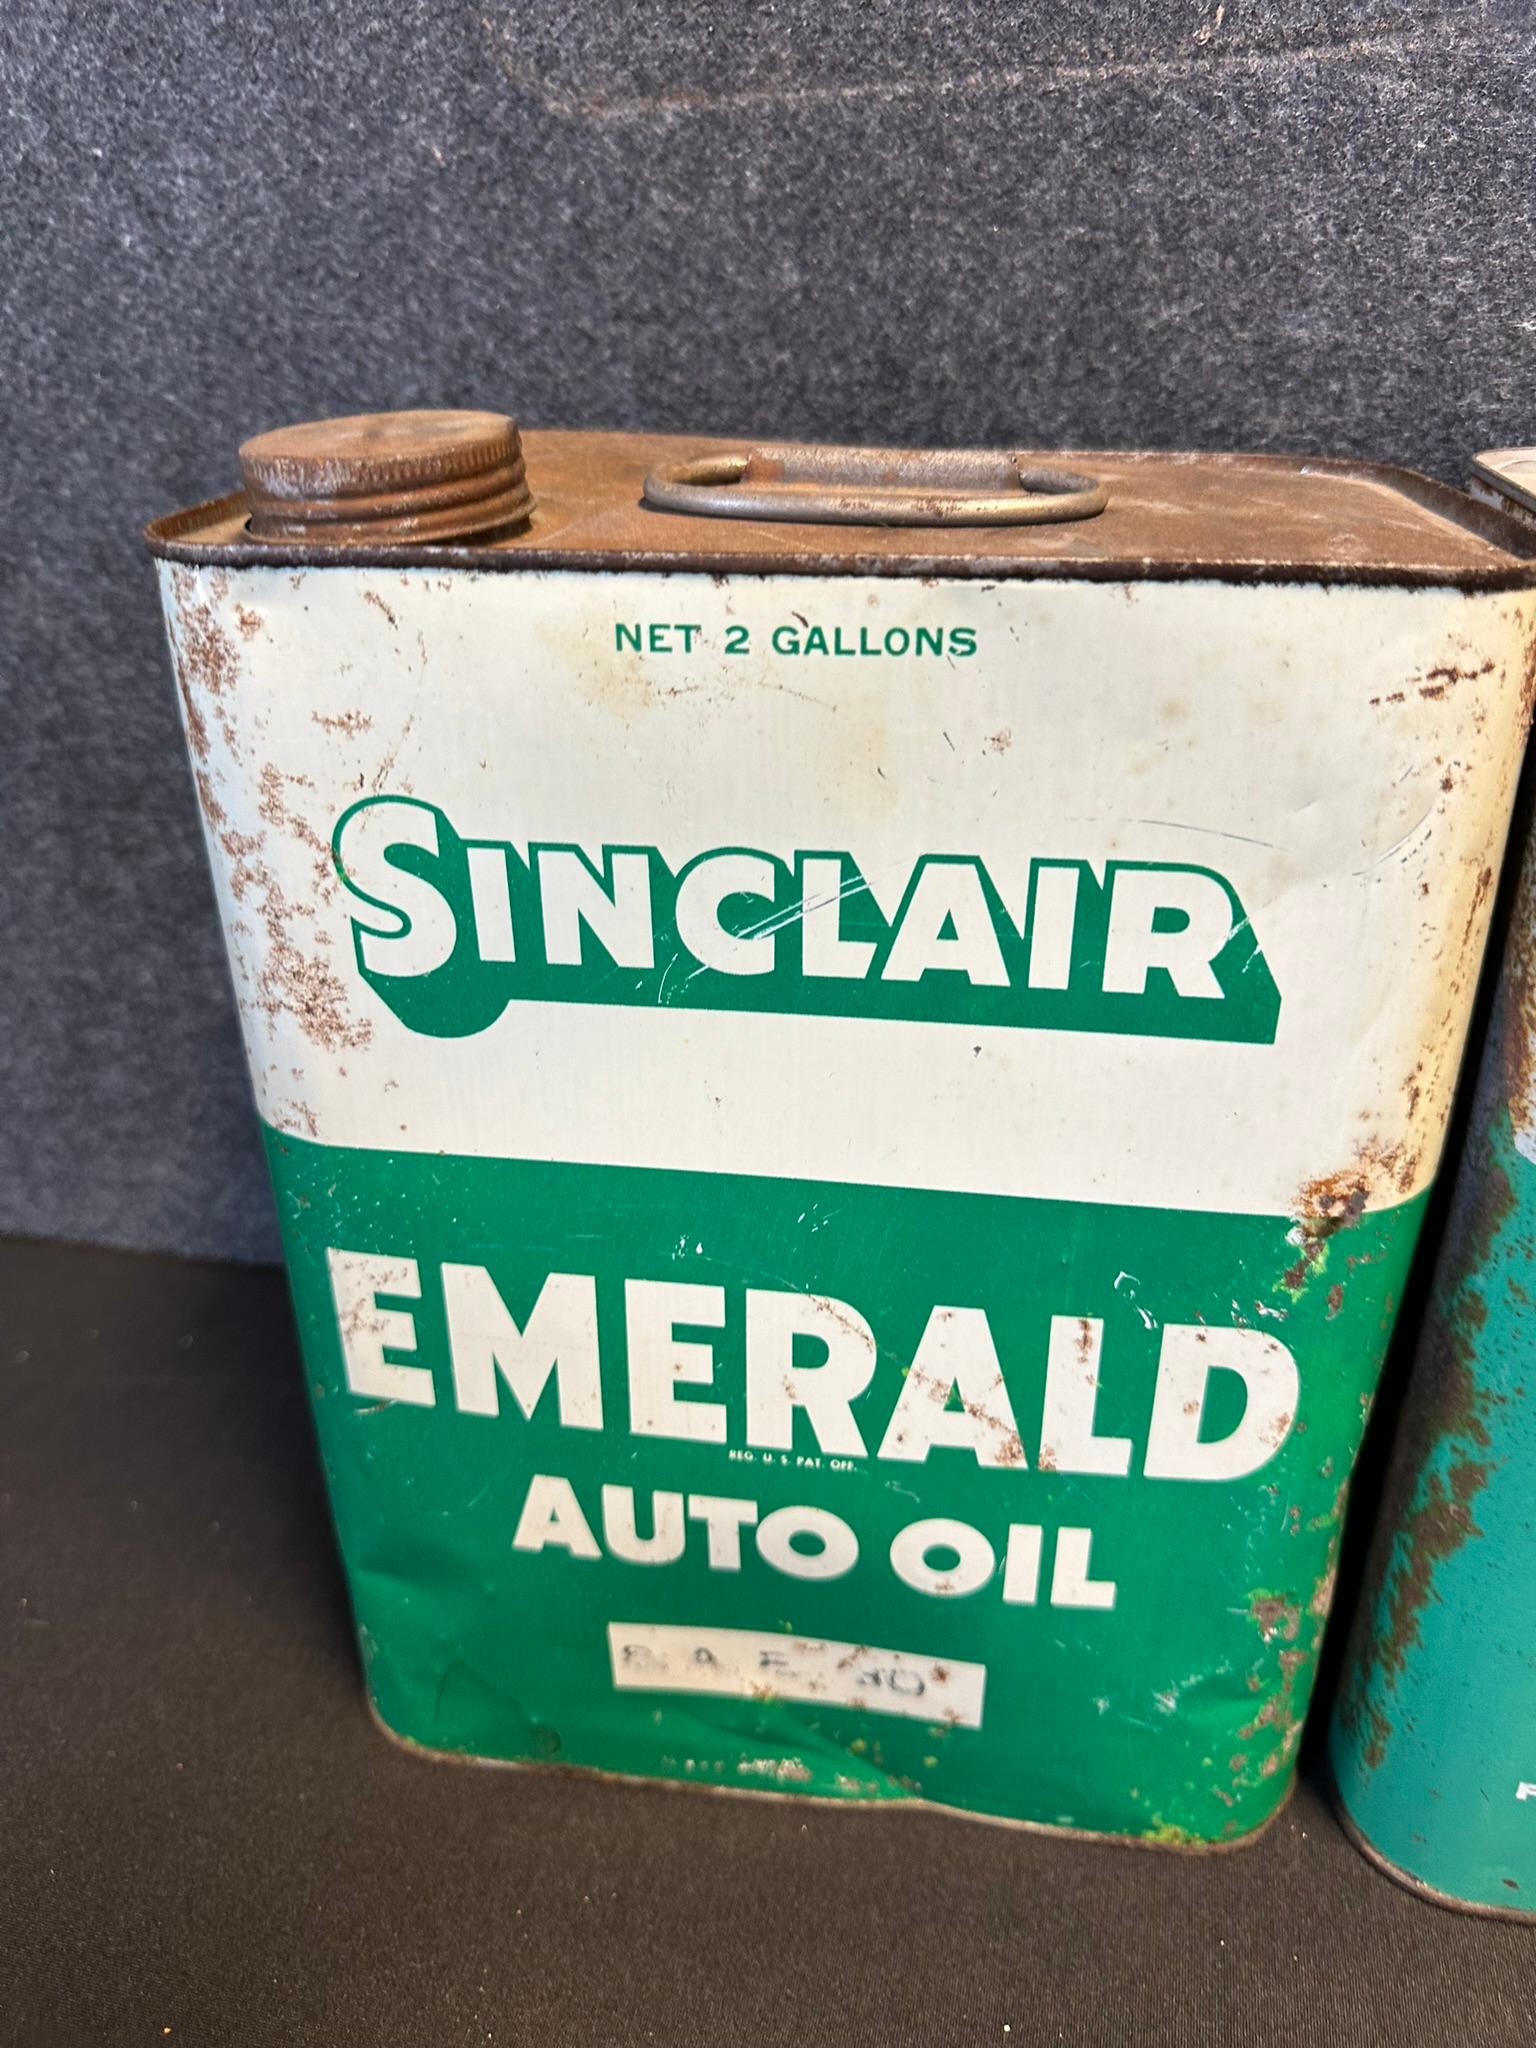 Lot 3 Original Sinclair Emerald Auto Oil 2 Gallon Motor Oil Cans